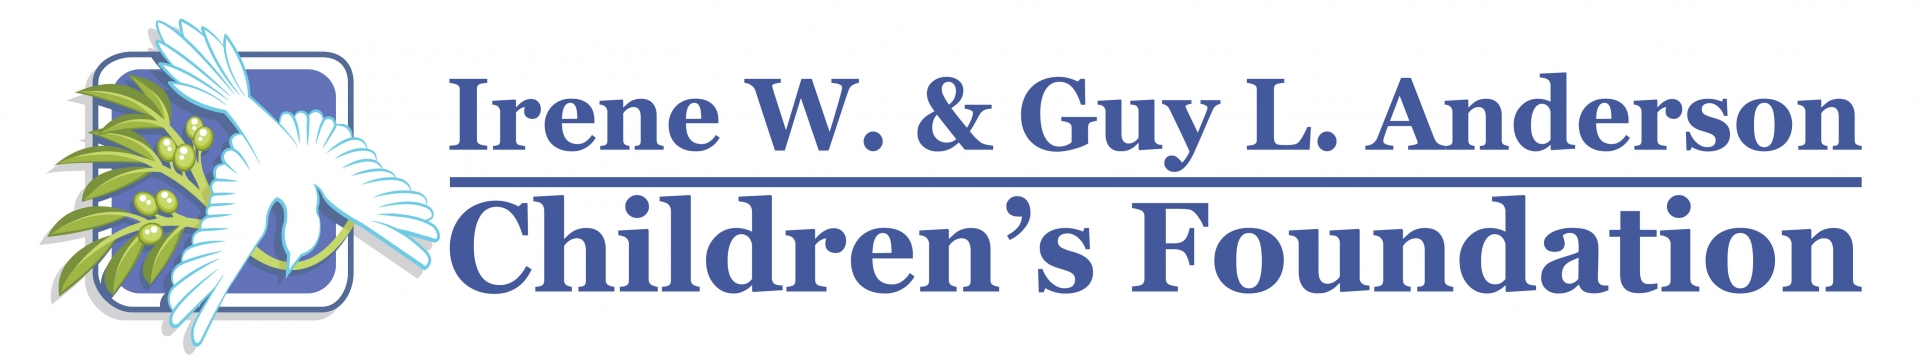 Anderson Children's Foundation logo